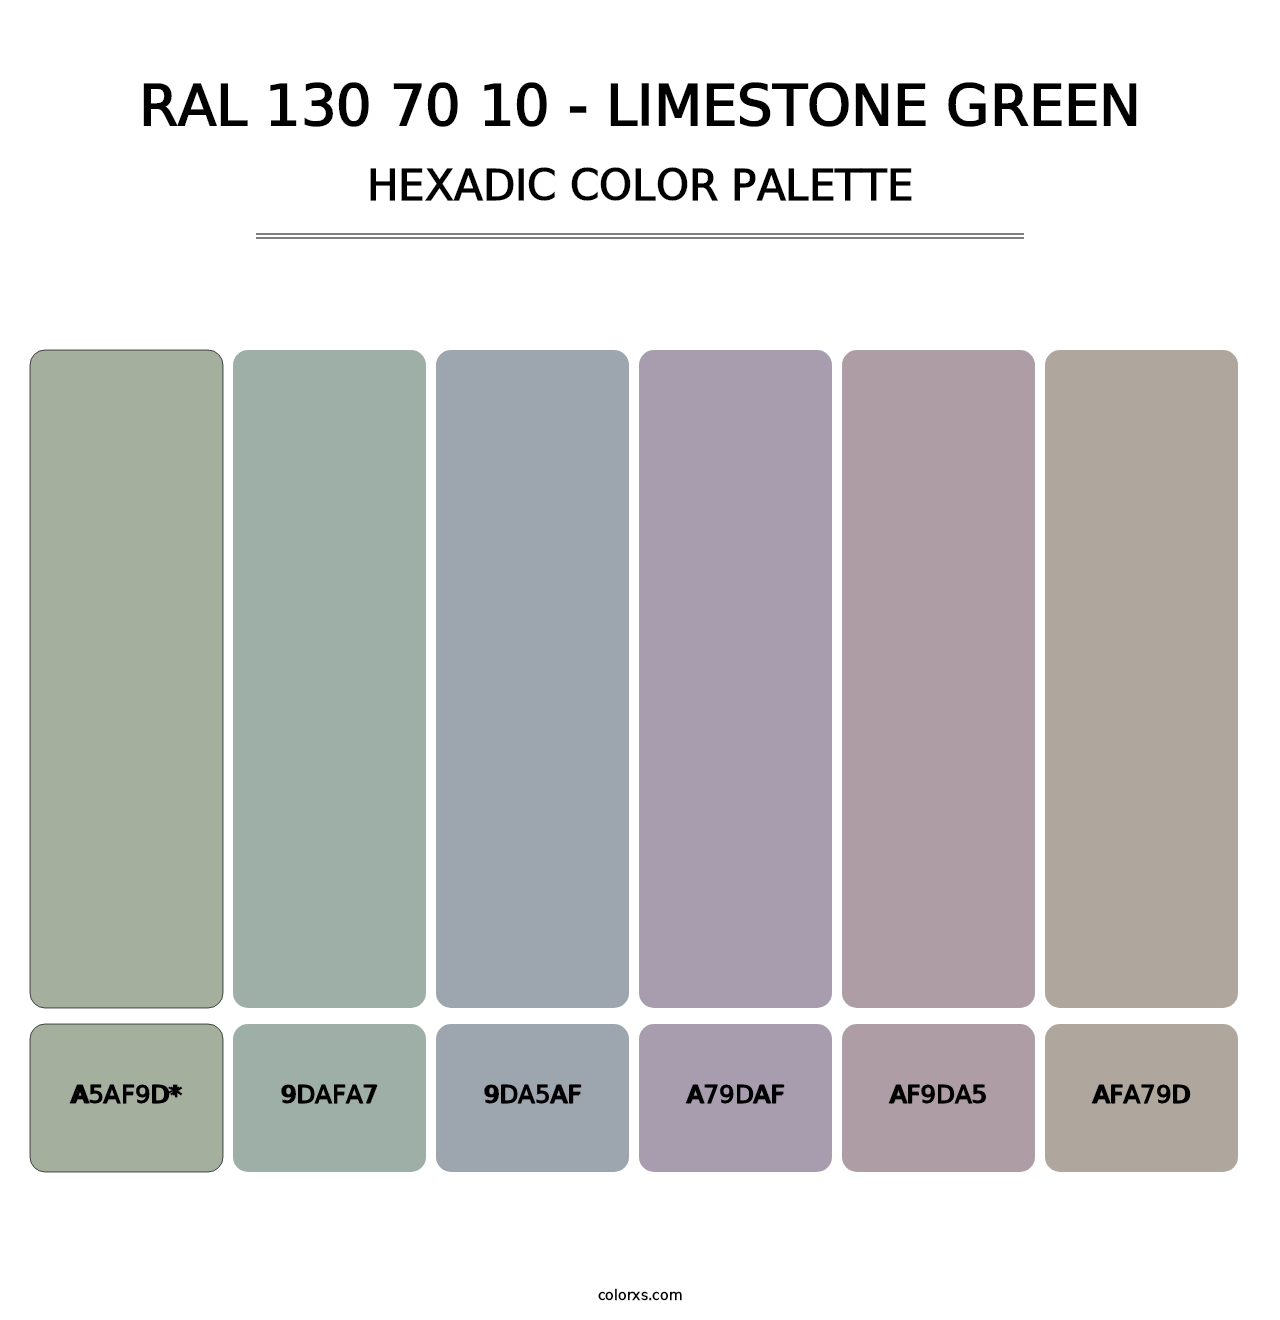 RAL 130 70 10 - Limestone Green - Hexadic Color Palette